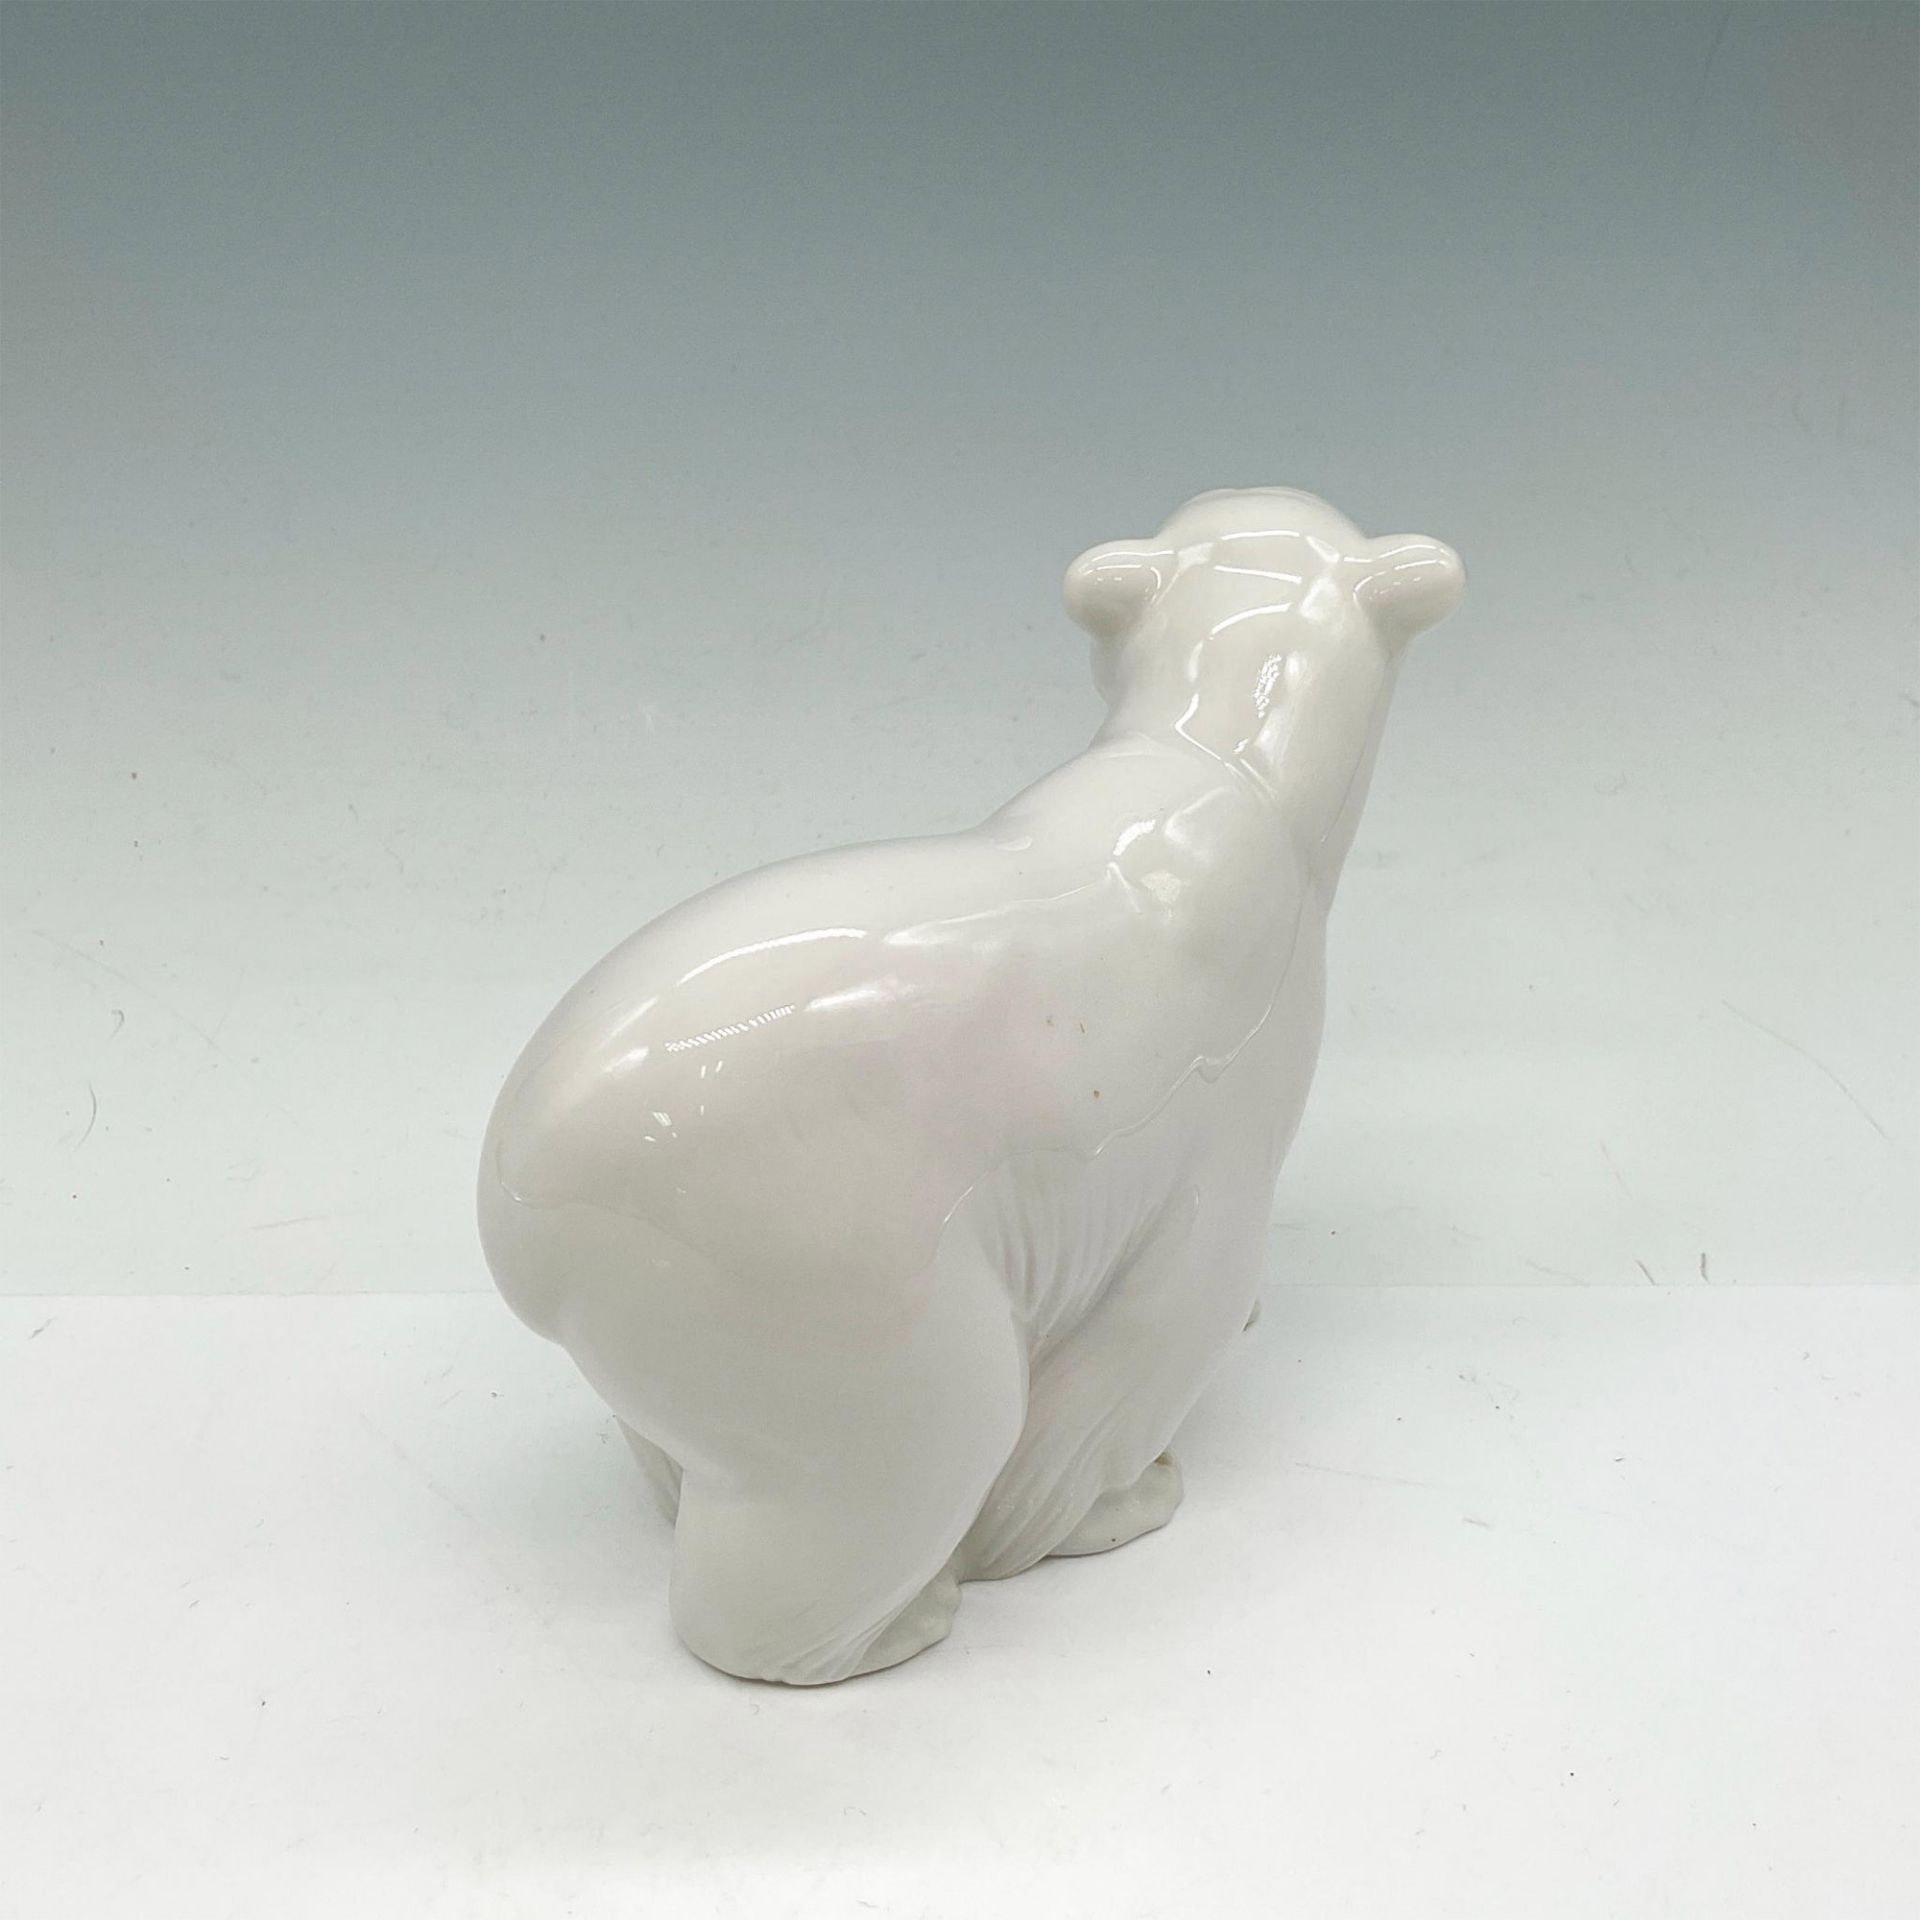 Lladro Porcelain Figurine, Attentive Polar Bear 1001207 - Image 2 of 3